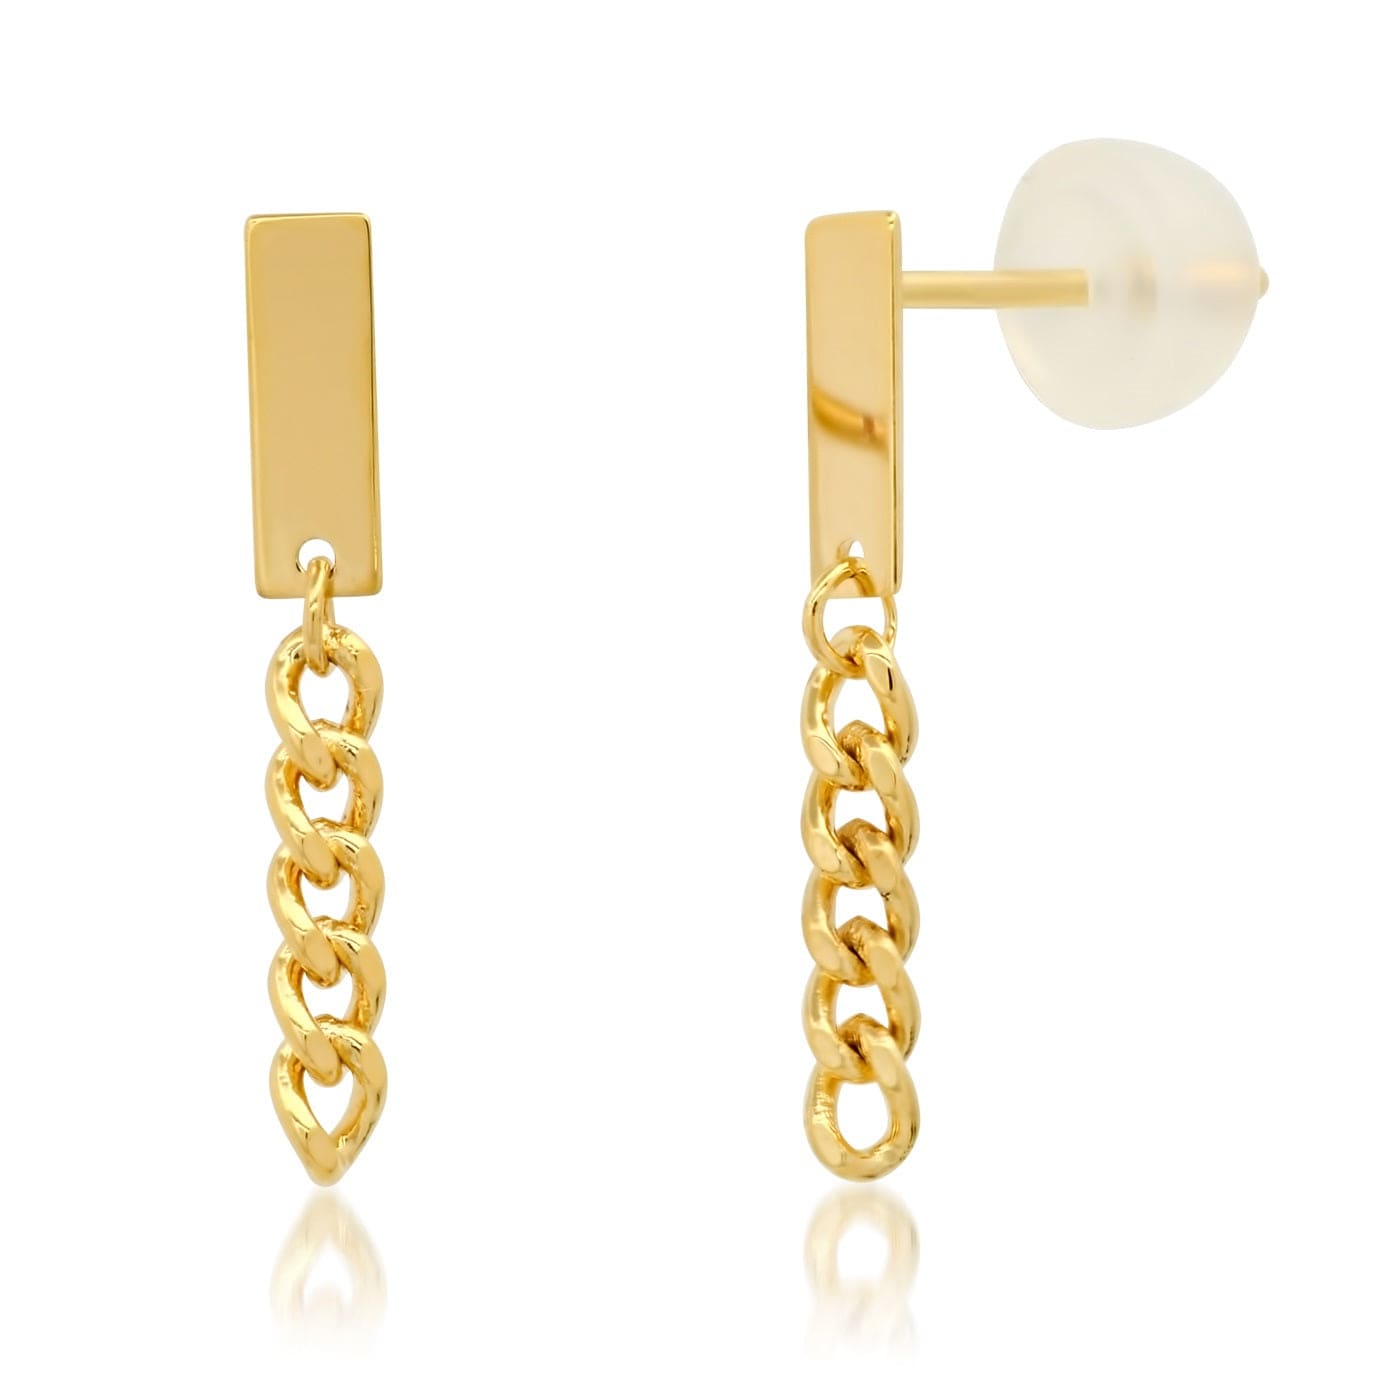 TAI JEWELRY Earrings Bar Post Curb Chain Linear Earrings